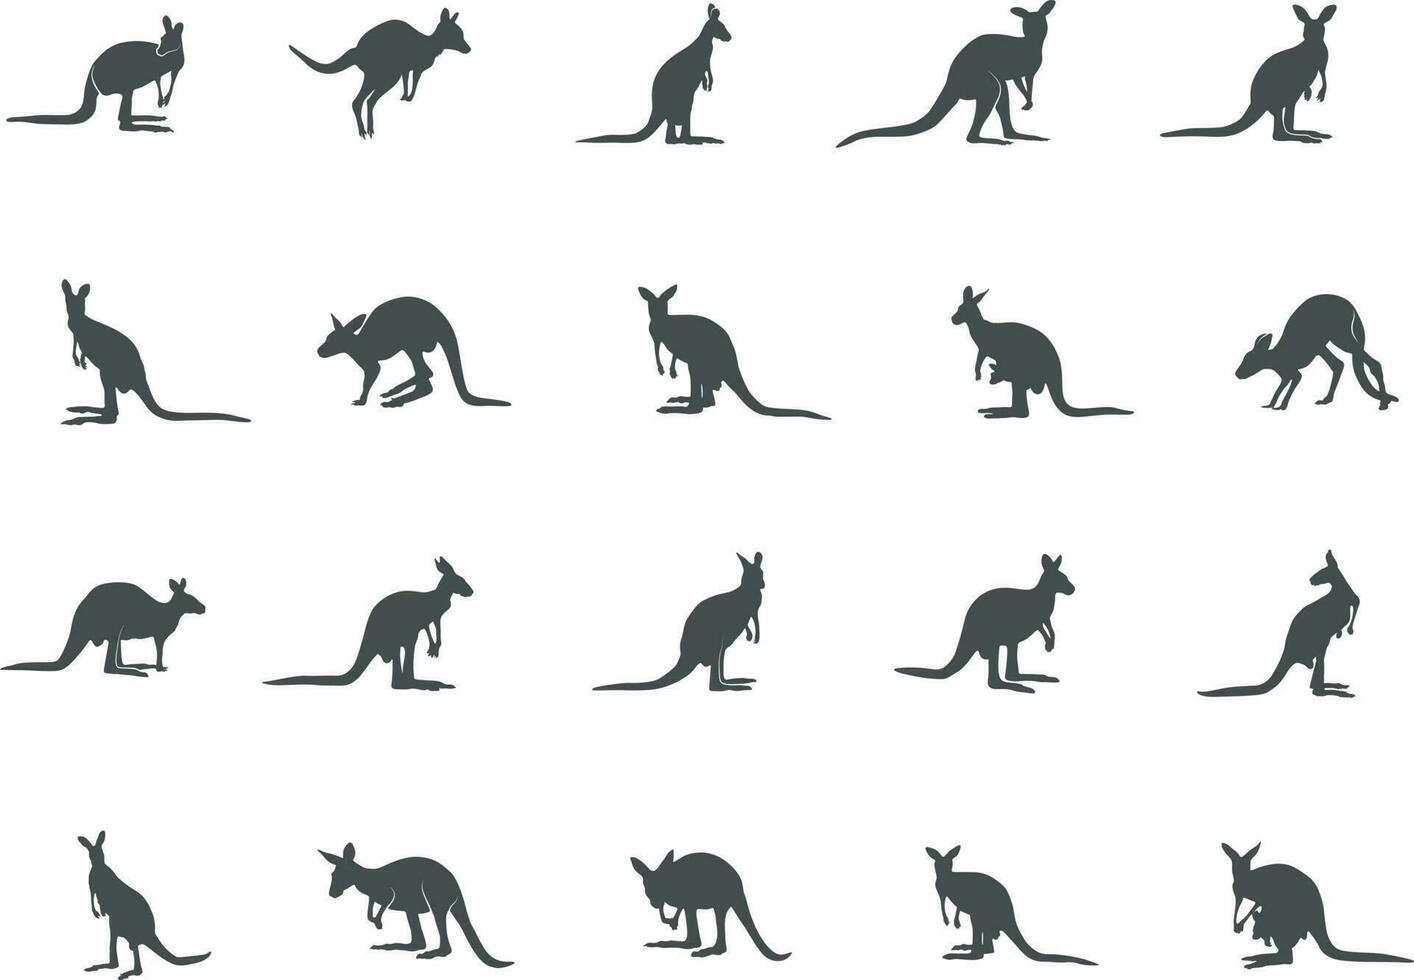 Kangaroo silhouettes, Kangaroo silhouette vector illustration.